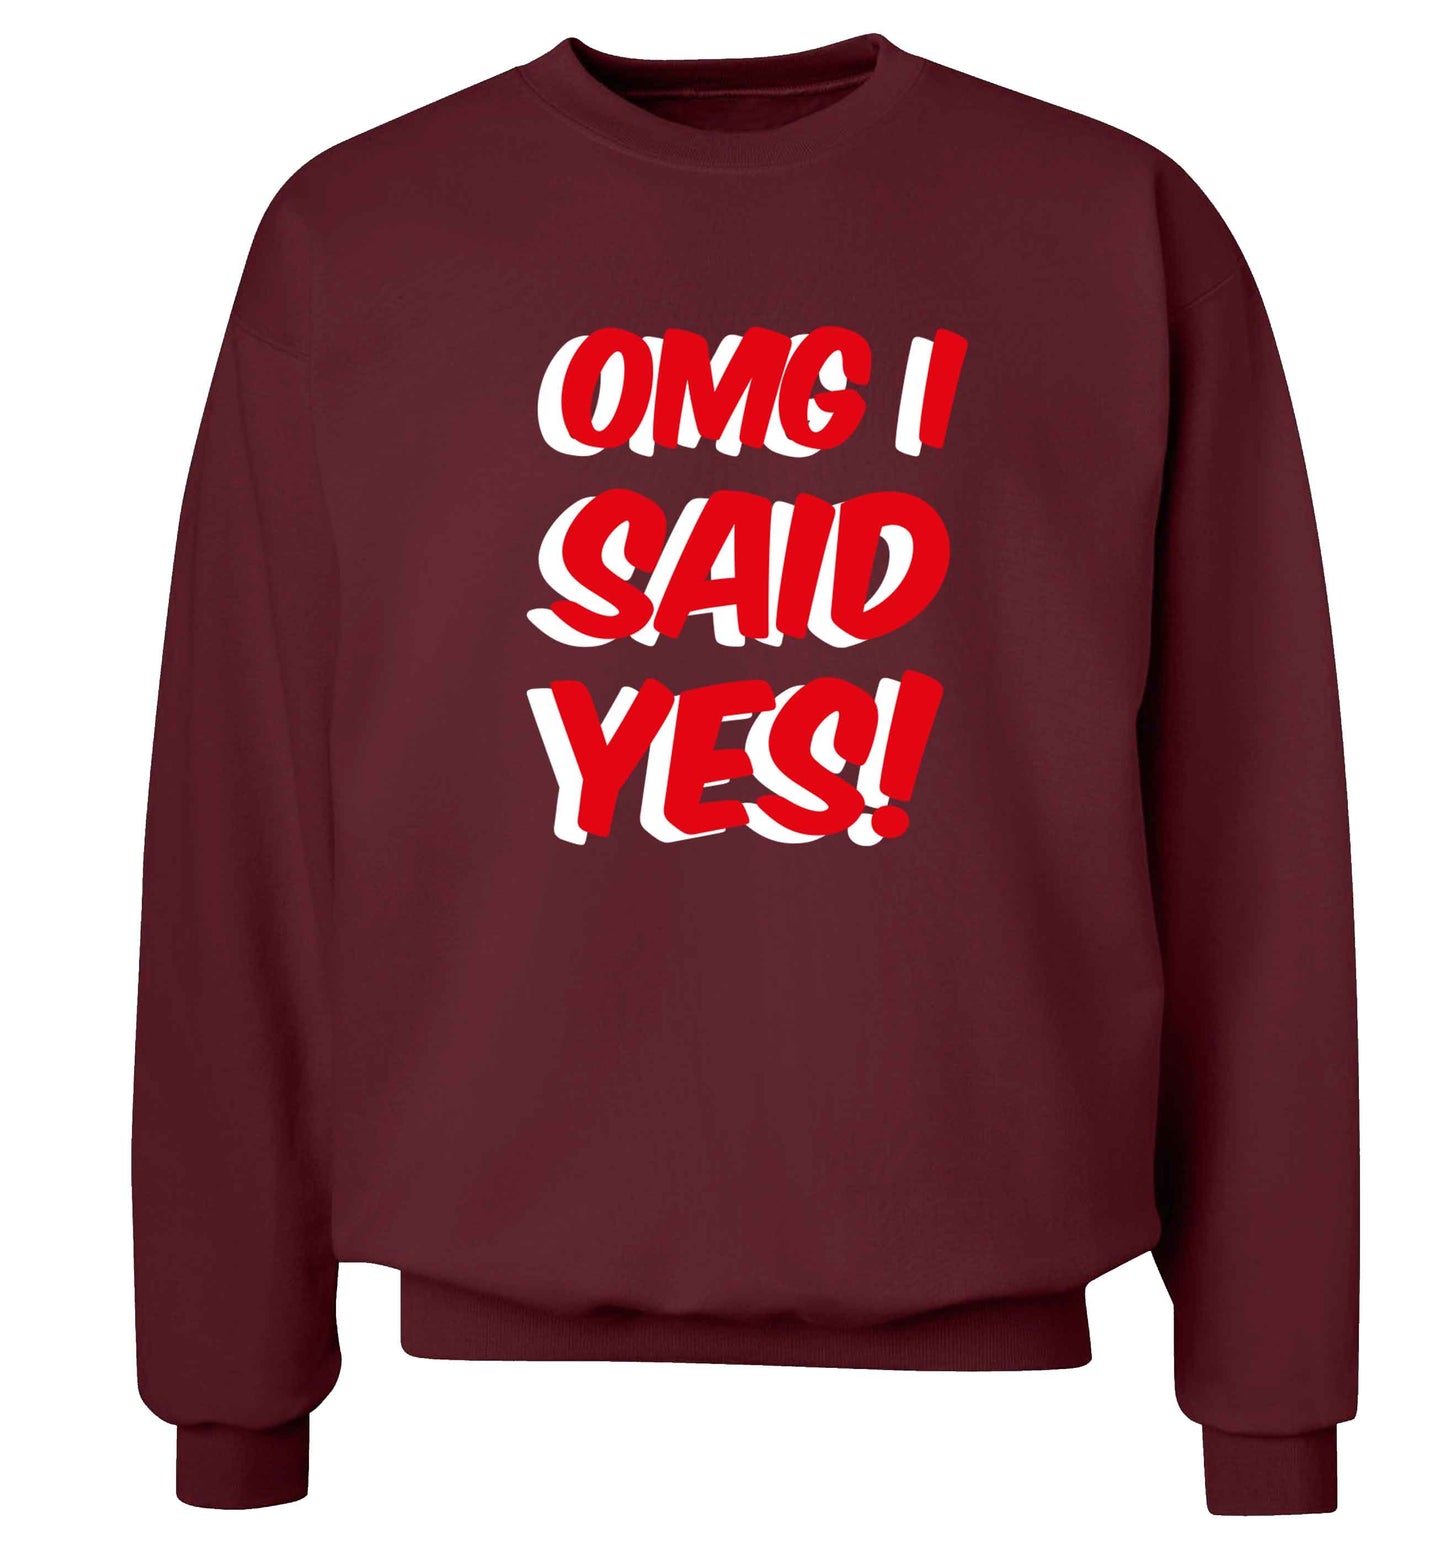 Omg I said yes adult's unisex maroon sweater 2XL